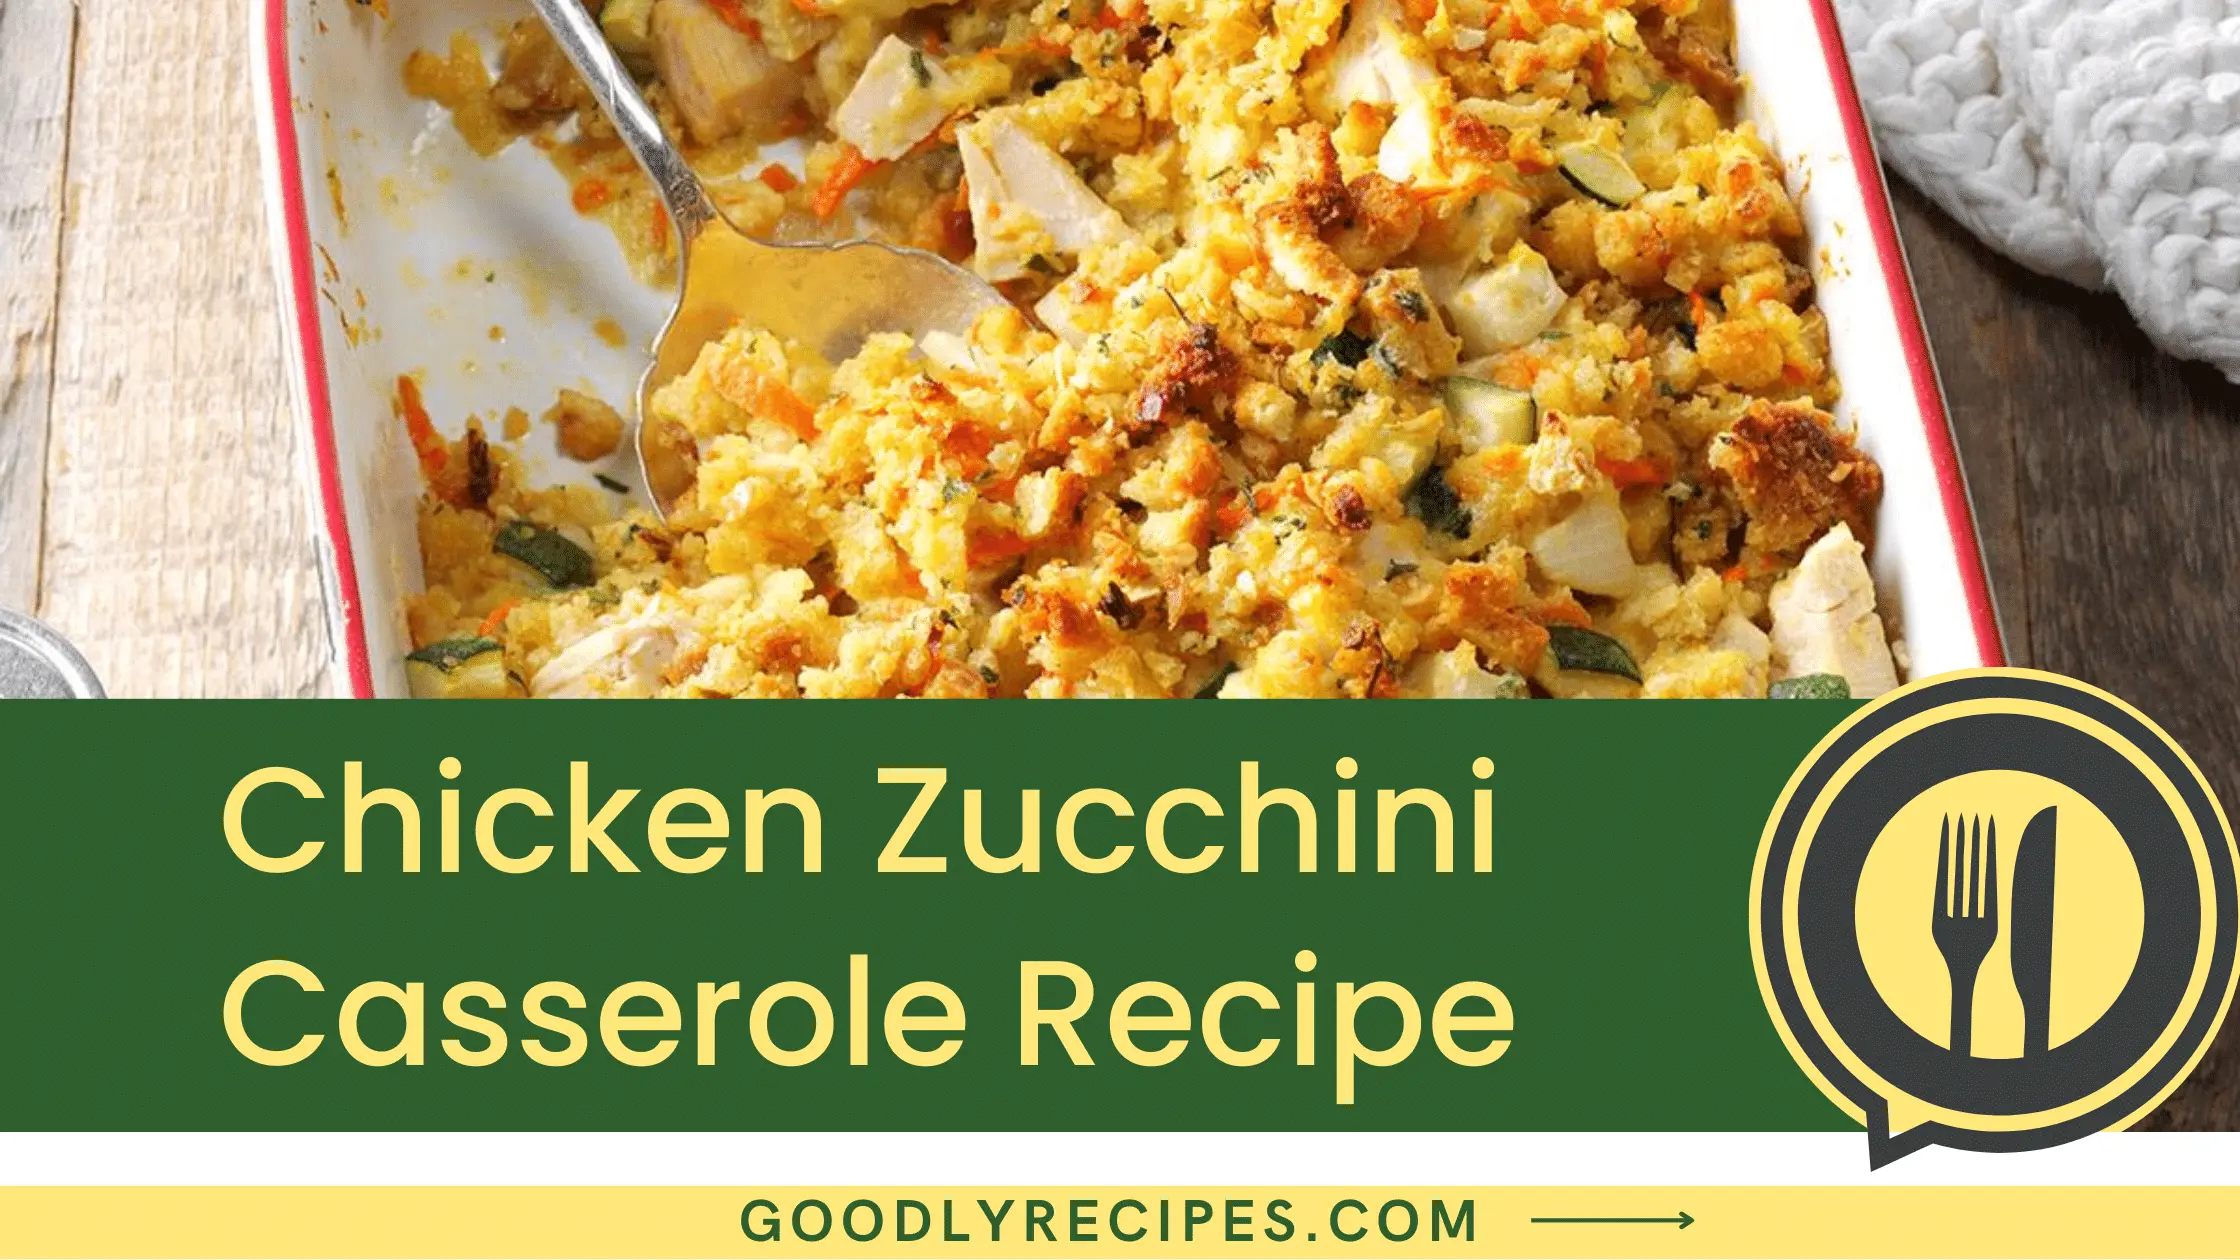 Chicken Zucchini Casserole Recipe - For Food Lovers